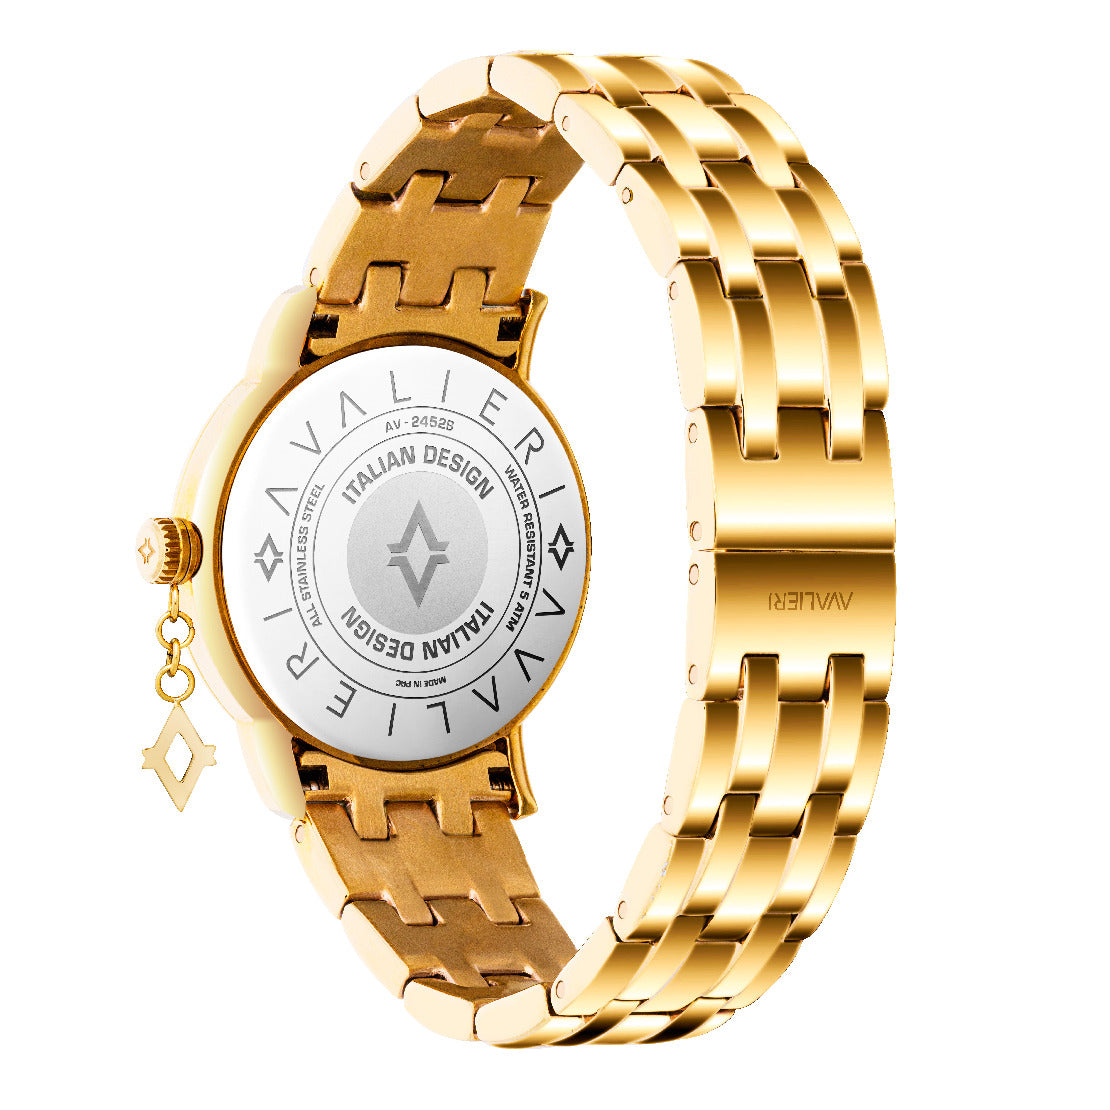 Avalieri Women's Quartz Watch With Silver White Dial - AV-2452B